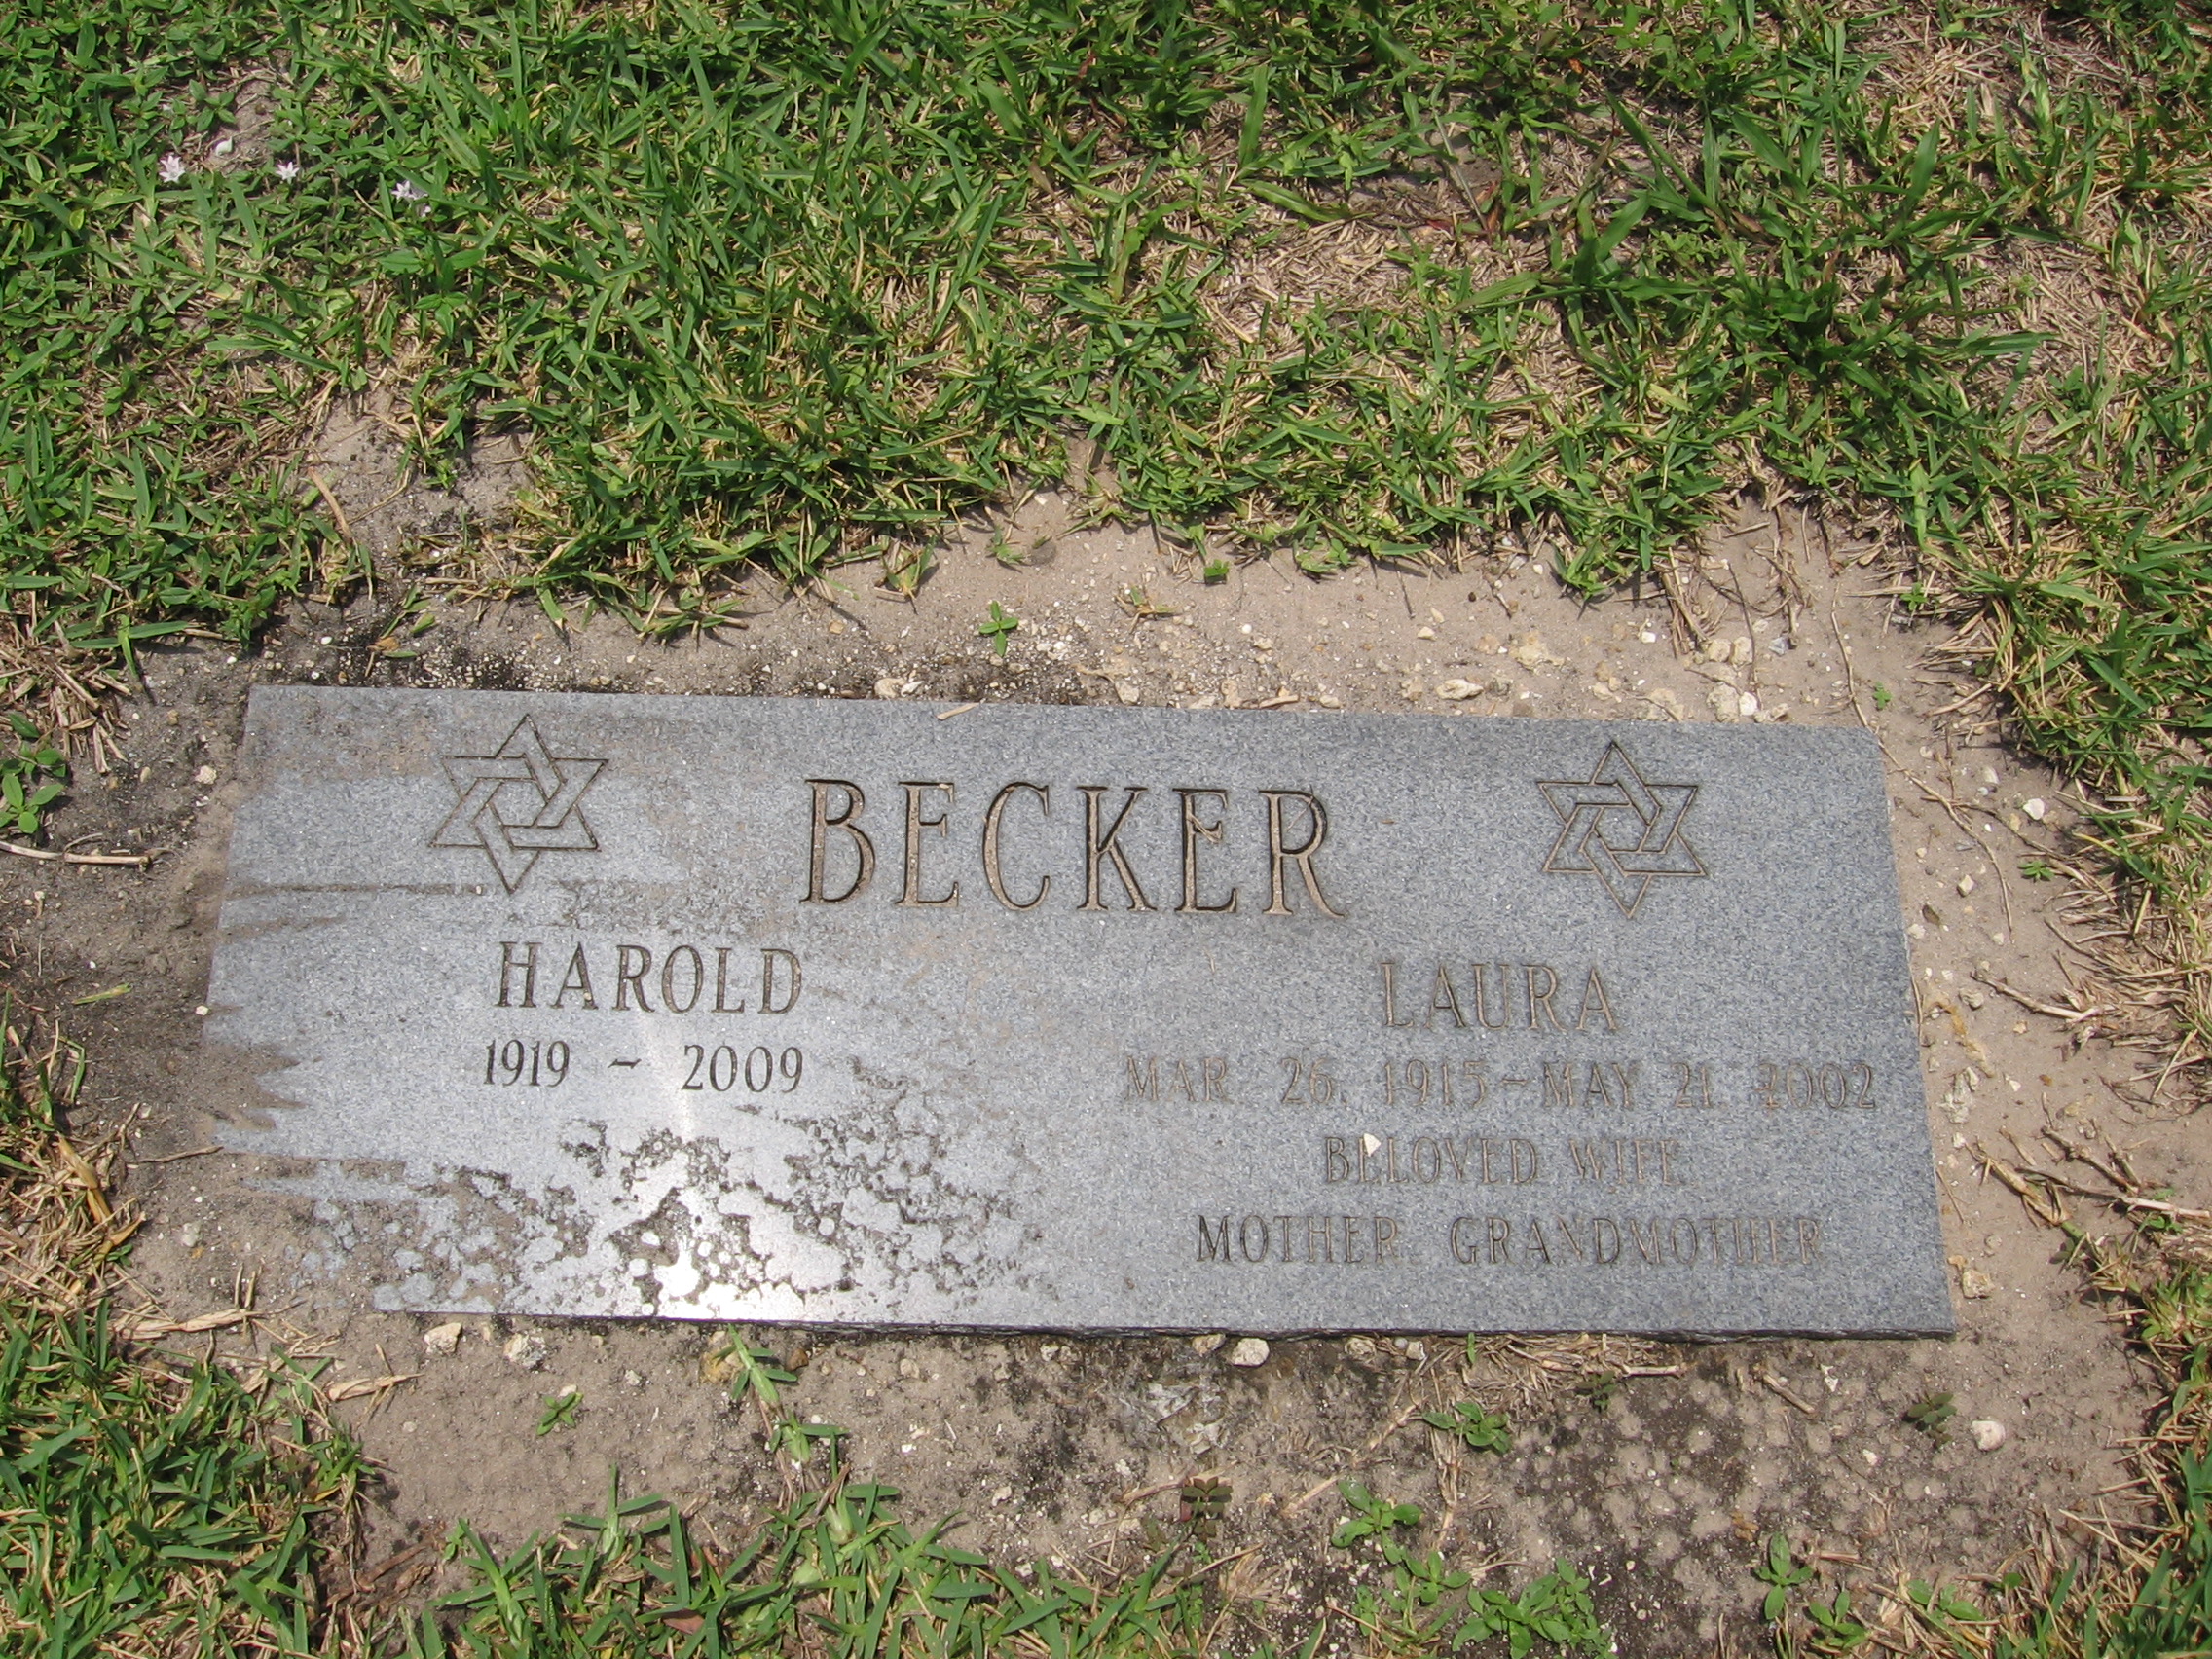 Harold Becker